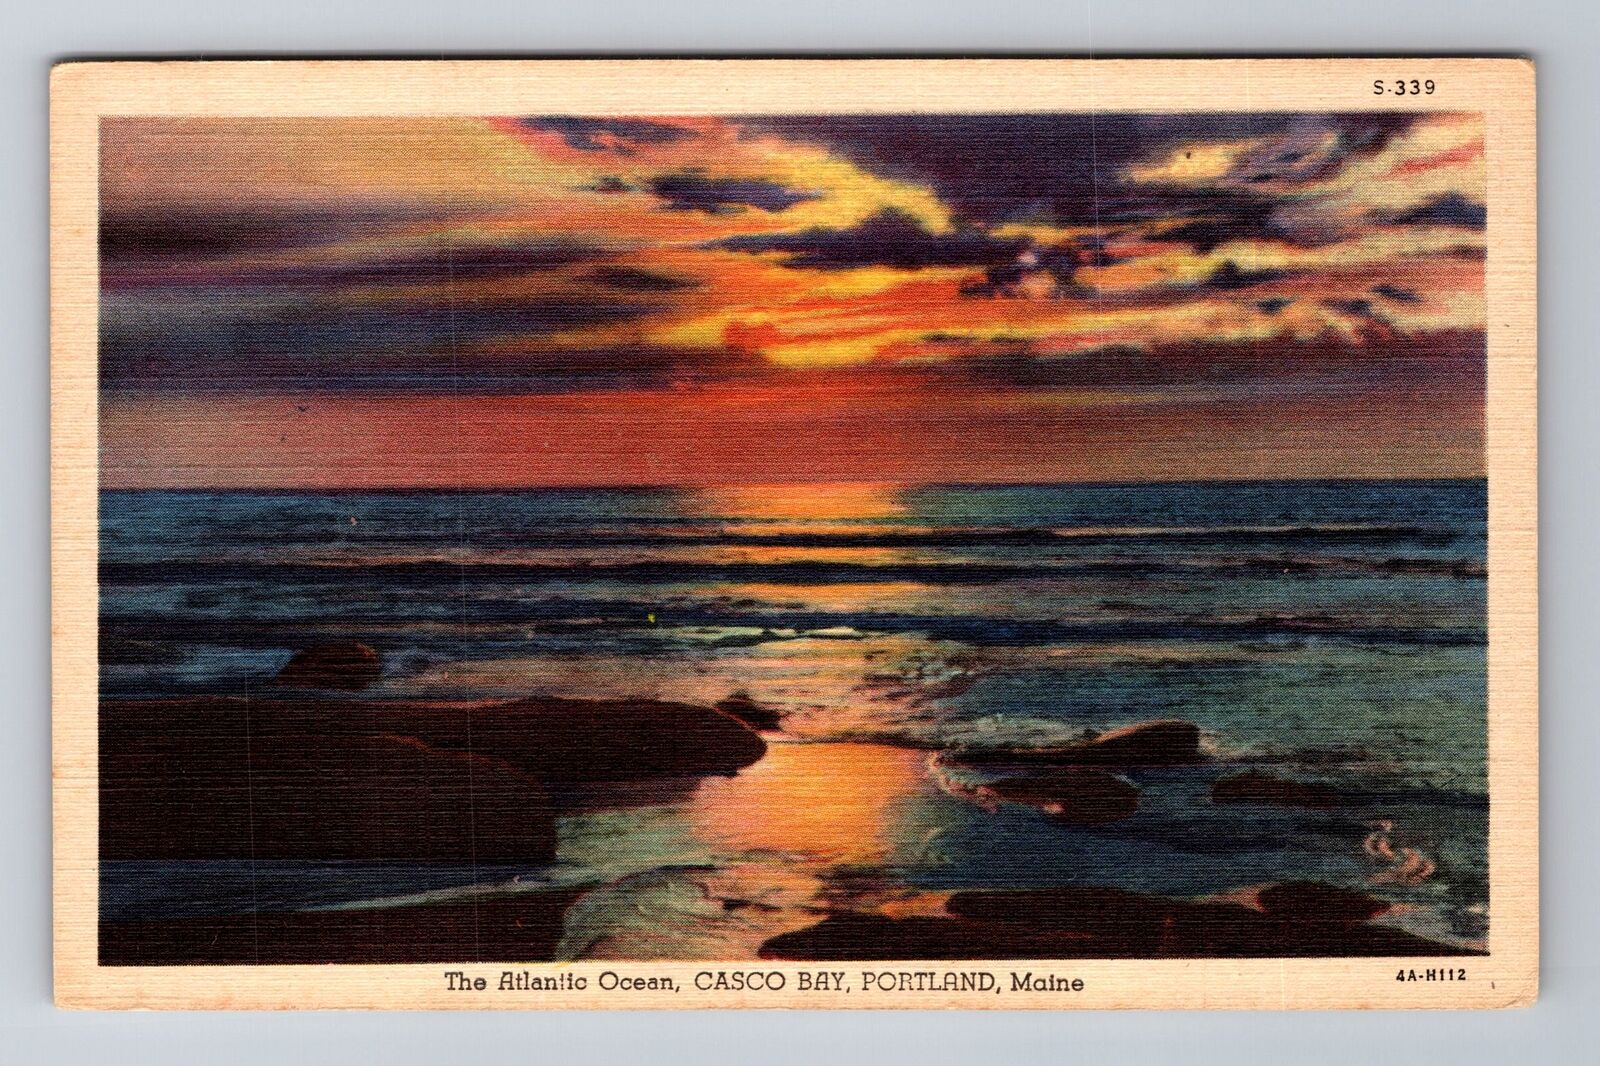 Portland ME-Maine, Casco Bay, Atlantic Ocean, Vintage Souvenir Postcard